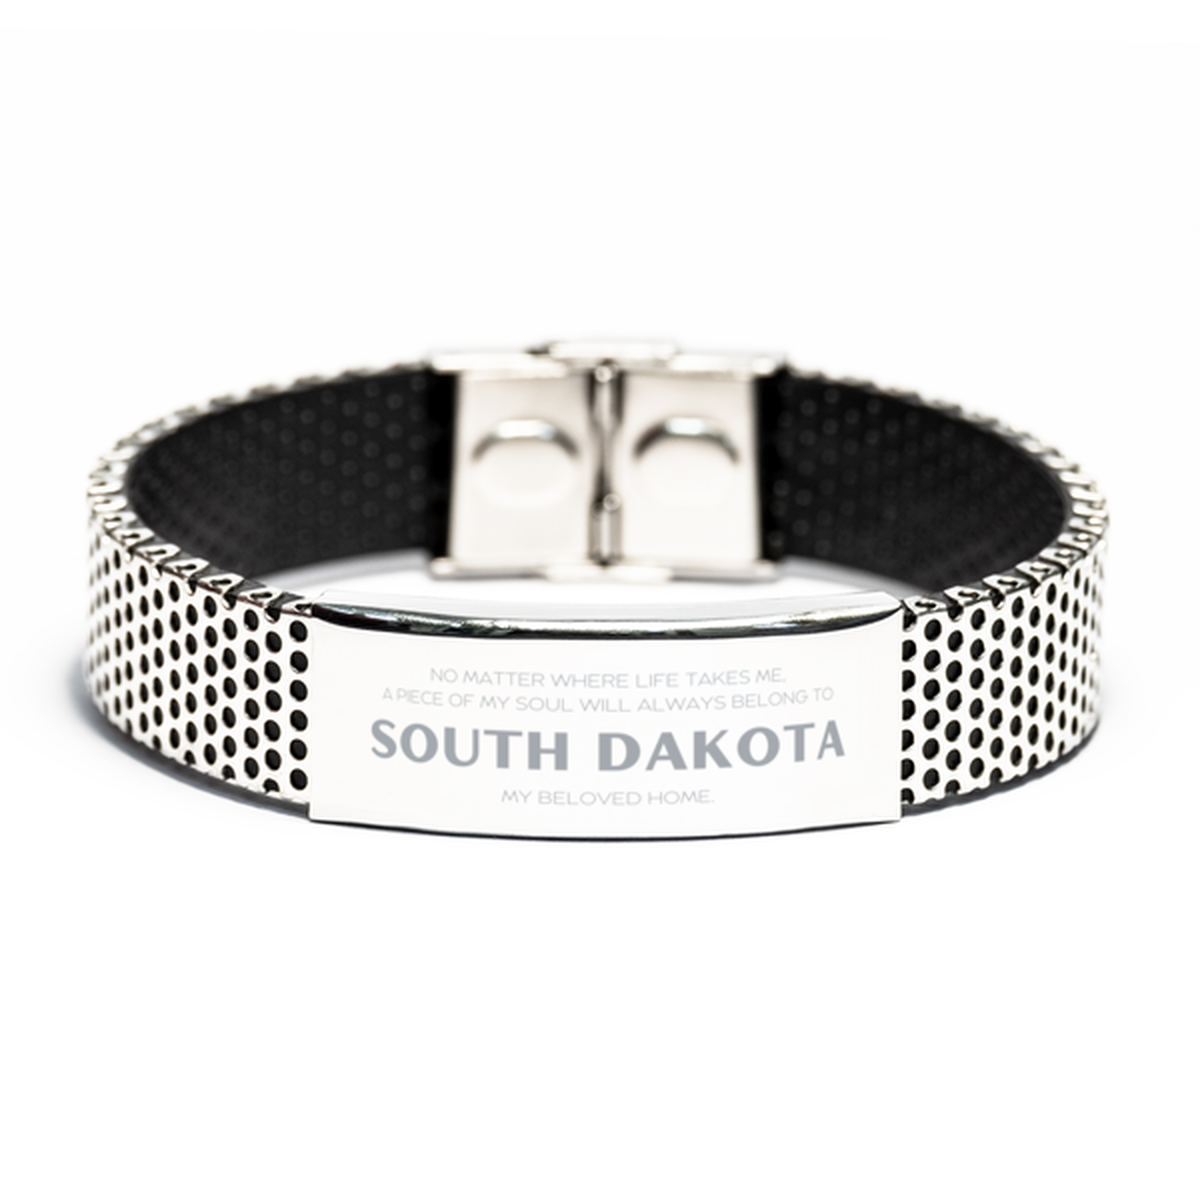 Love South Dakota State Gifts, My soul will always belong to South Dakota, Proud Stainless Steel Bracelet, Birthday Unique Gifts For South Dakota Men, Women, Friends